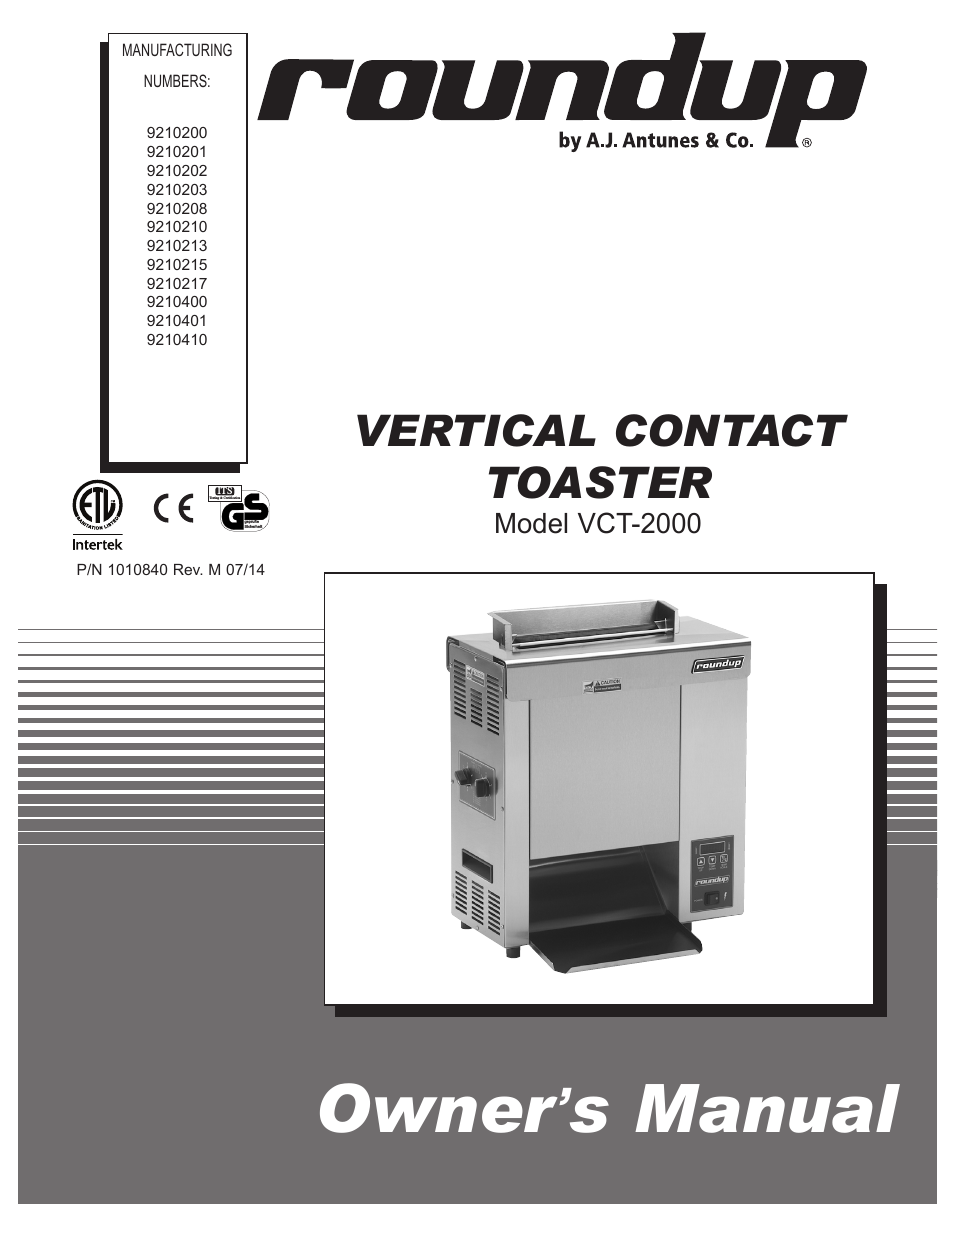 VCT-2000 9210210